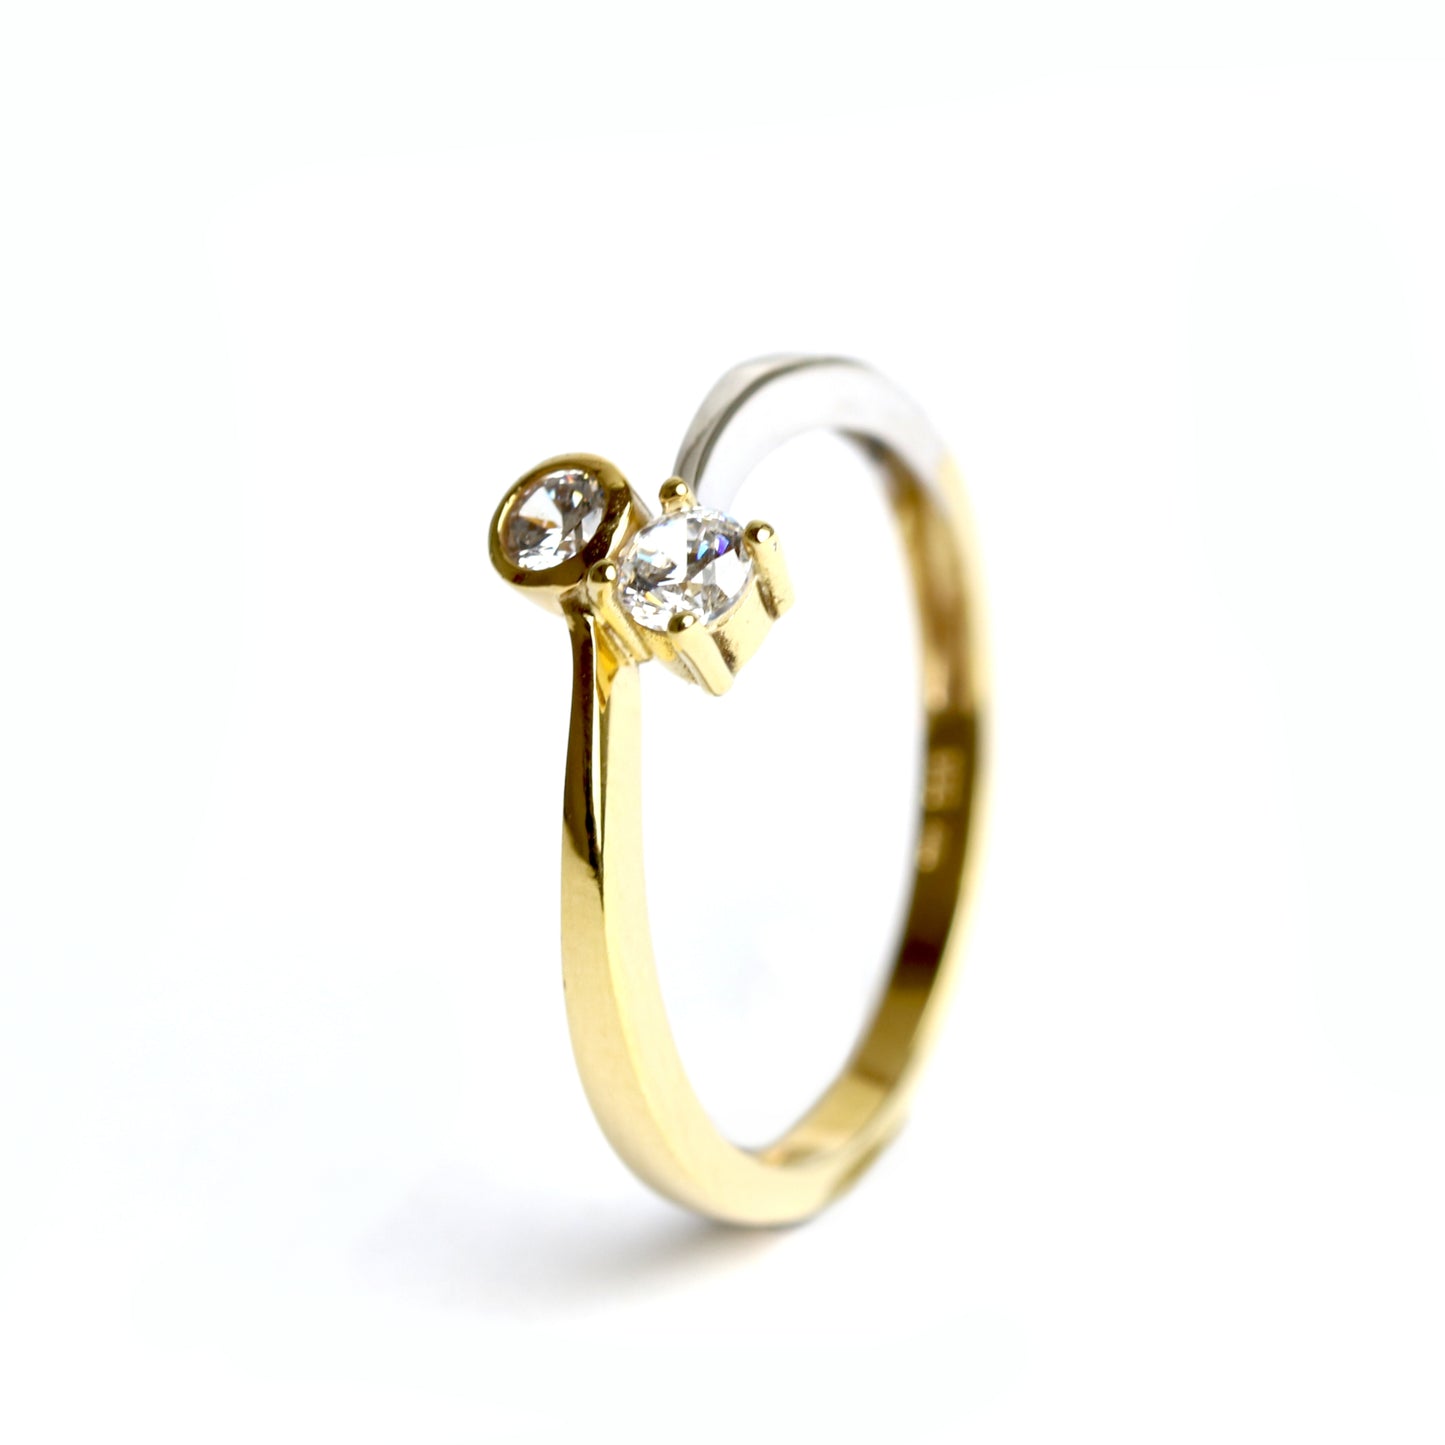 WILHELM MÜLLER - Ring in bicolor Gold mit Zirkonia